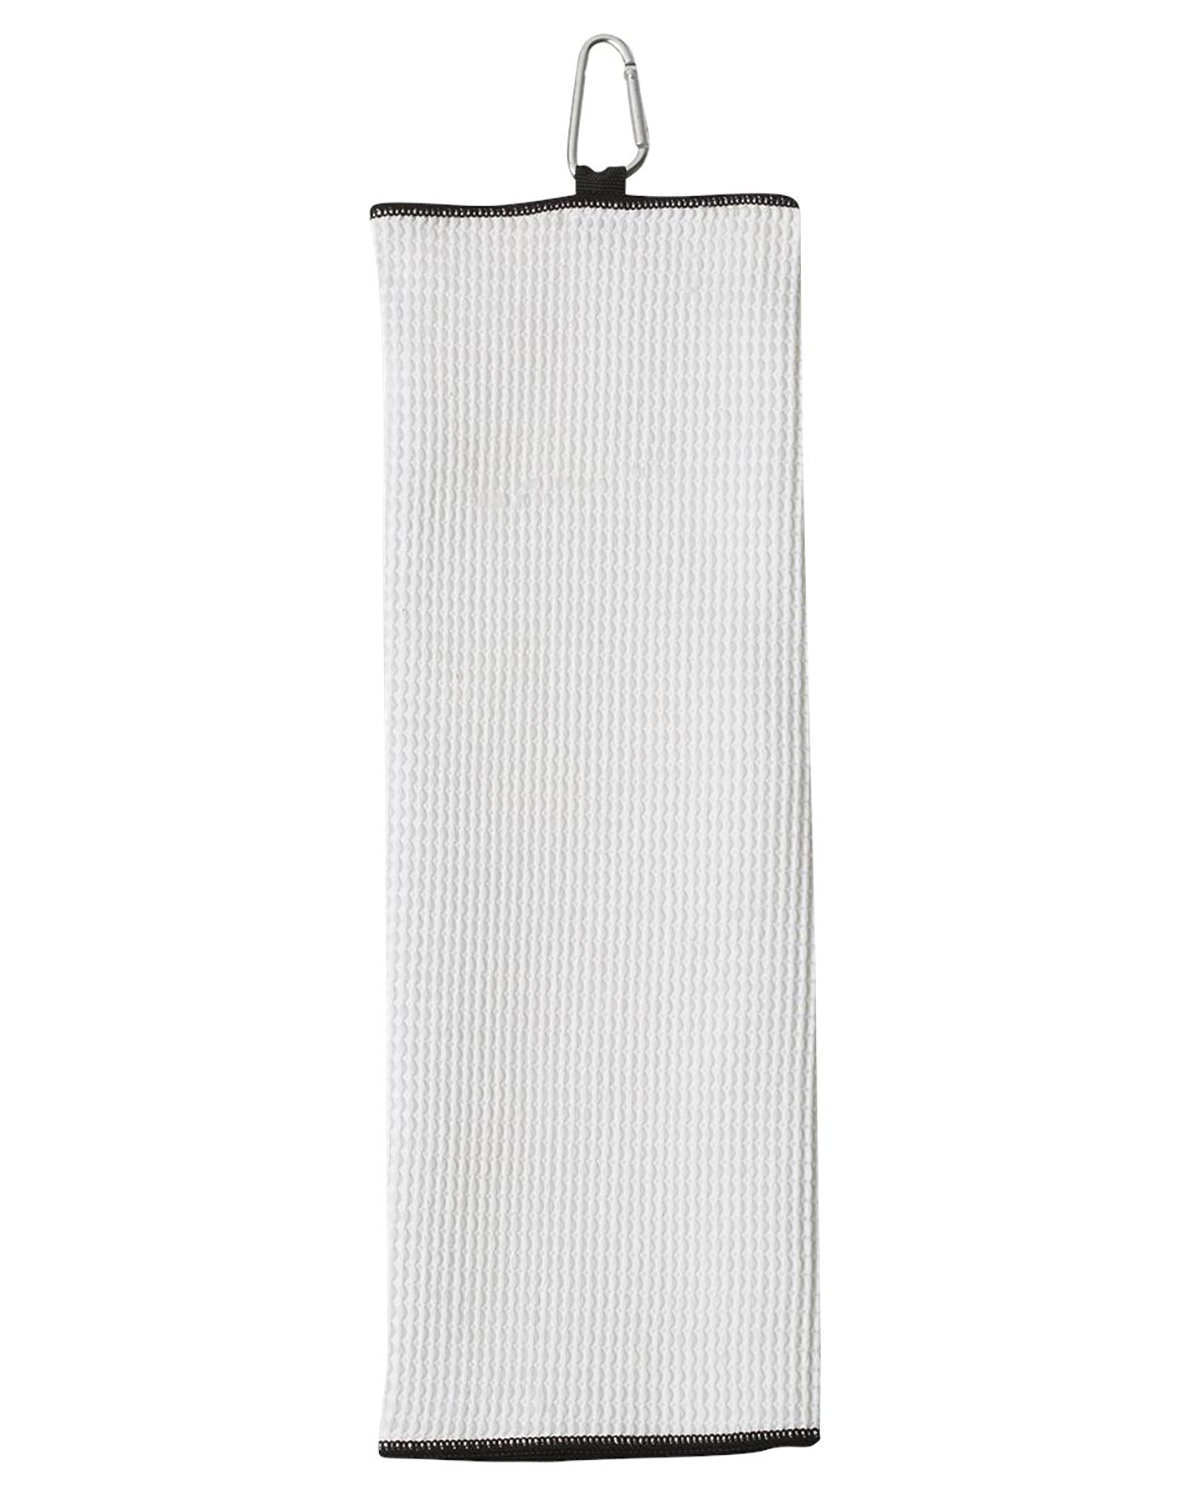 Fairway Trifold Golf Towel-Carmel Towel Company